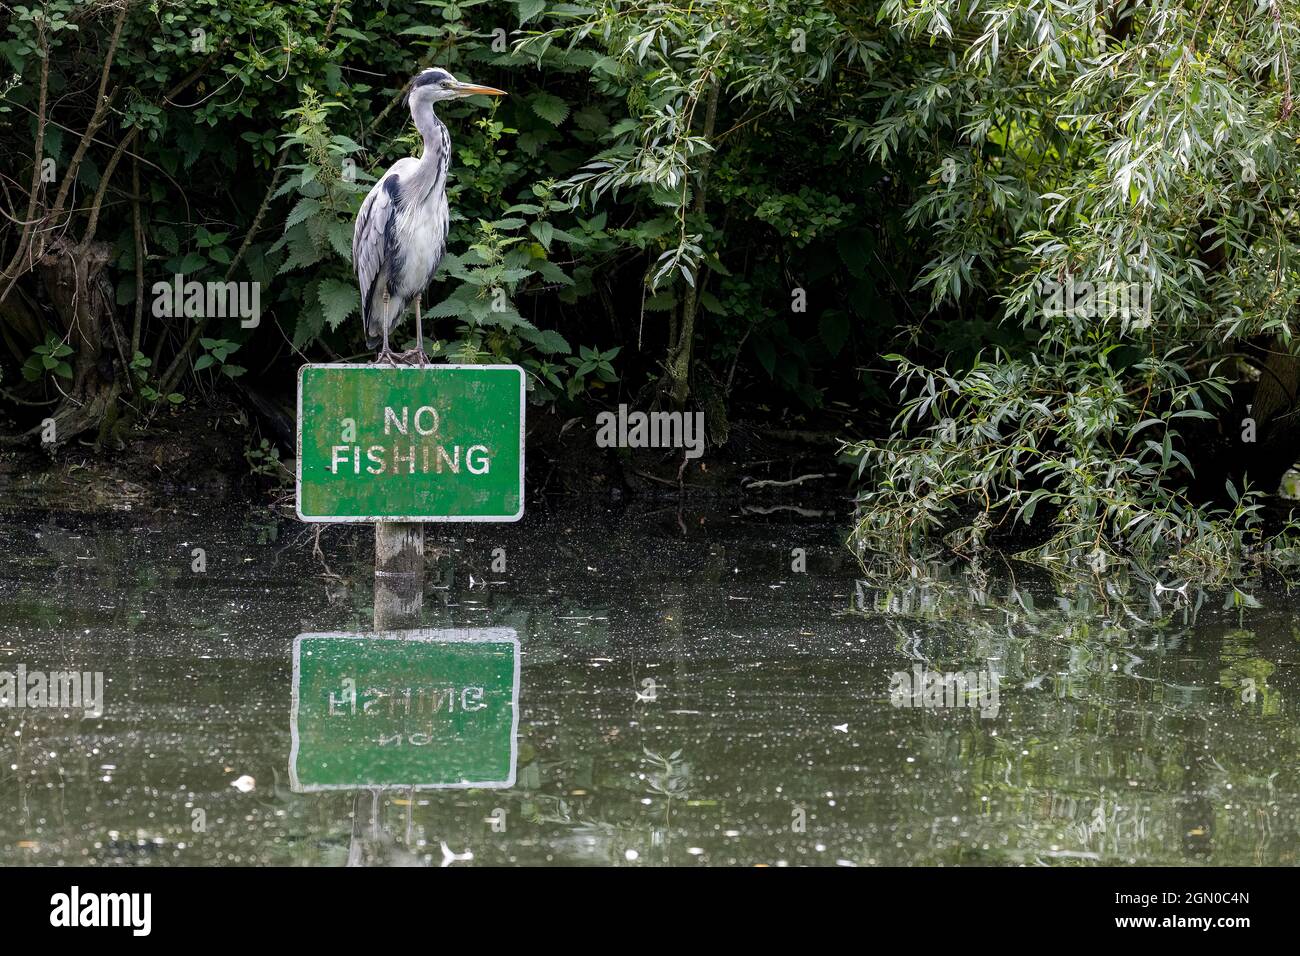 Grey heron (Ardea cinerea) standing on No Fishing sign Stock Photo